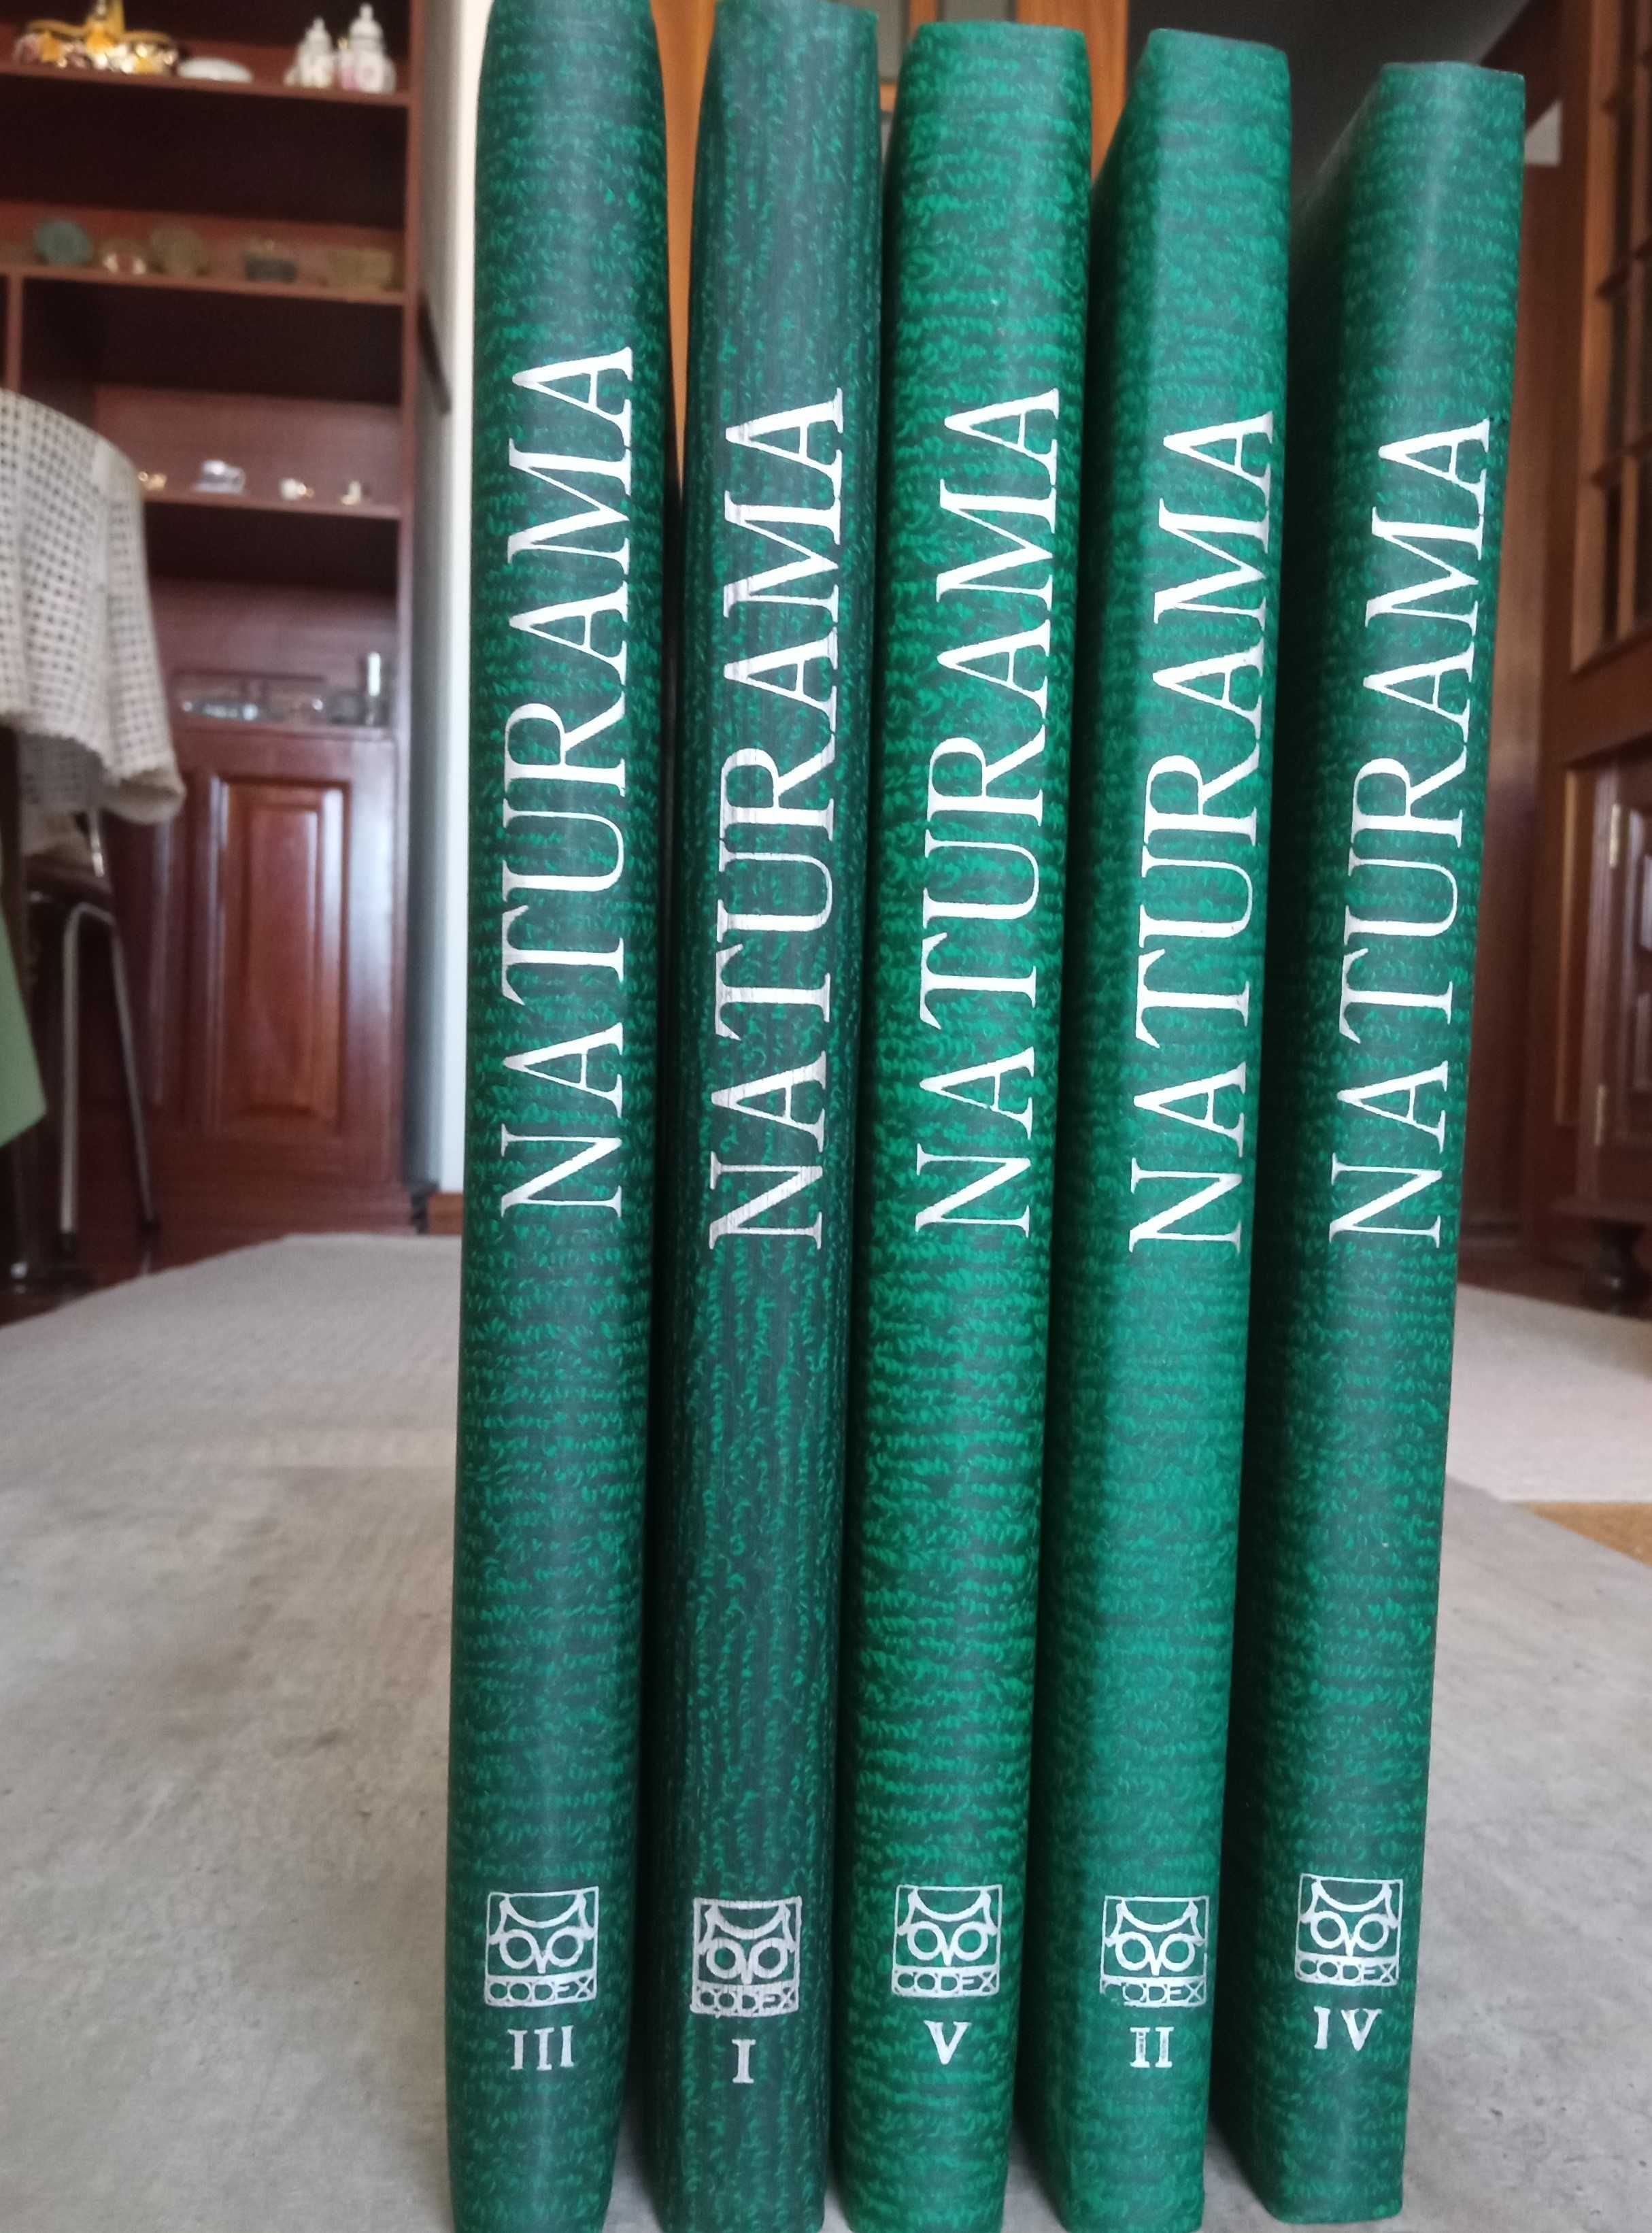 Mundo Animal. 5 volumes. 1965